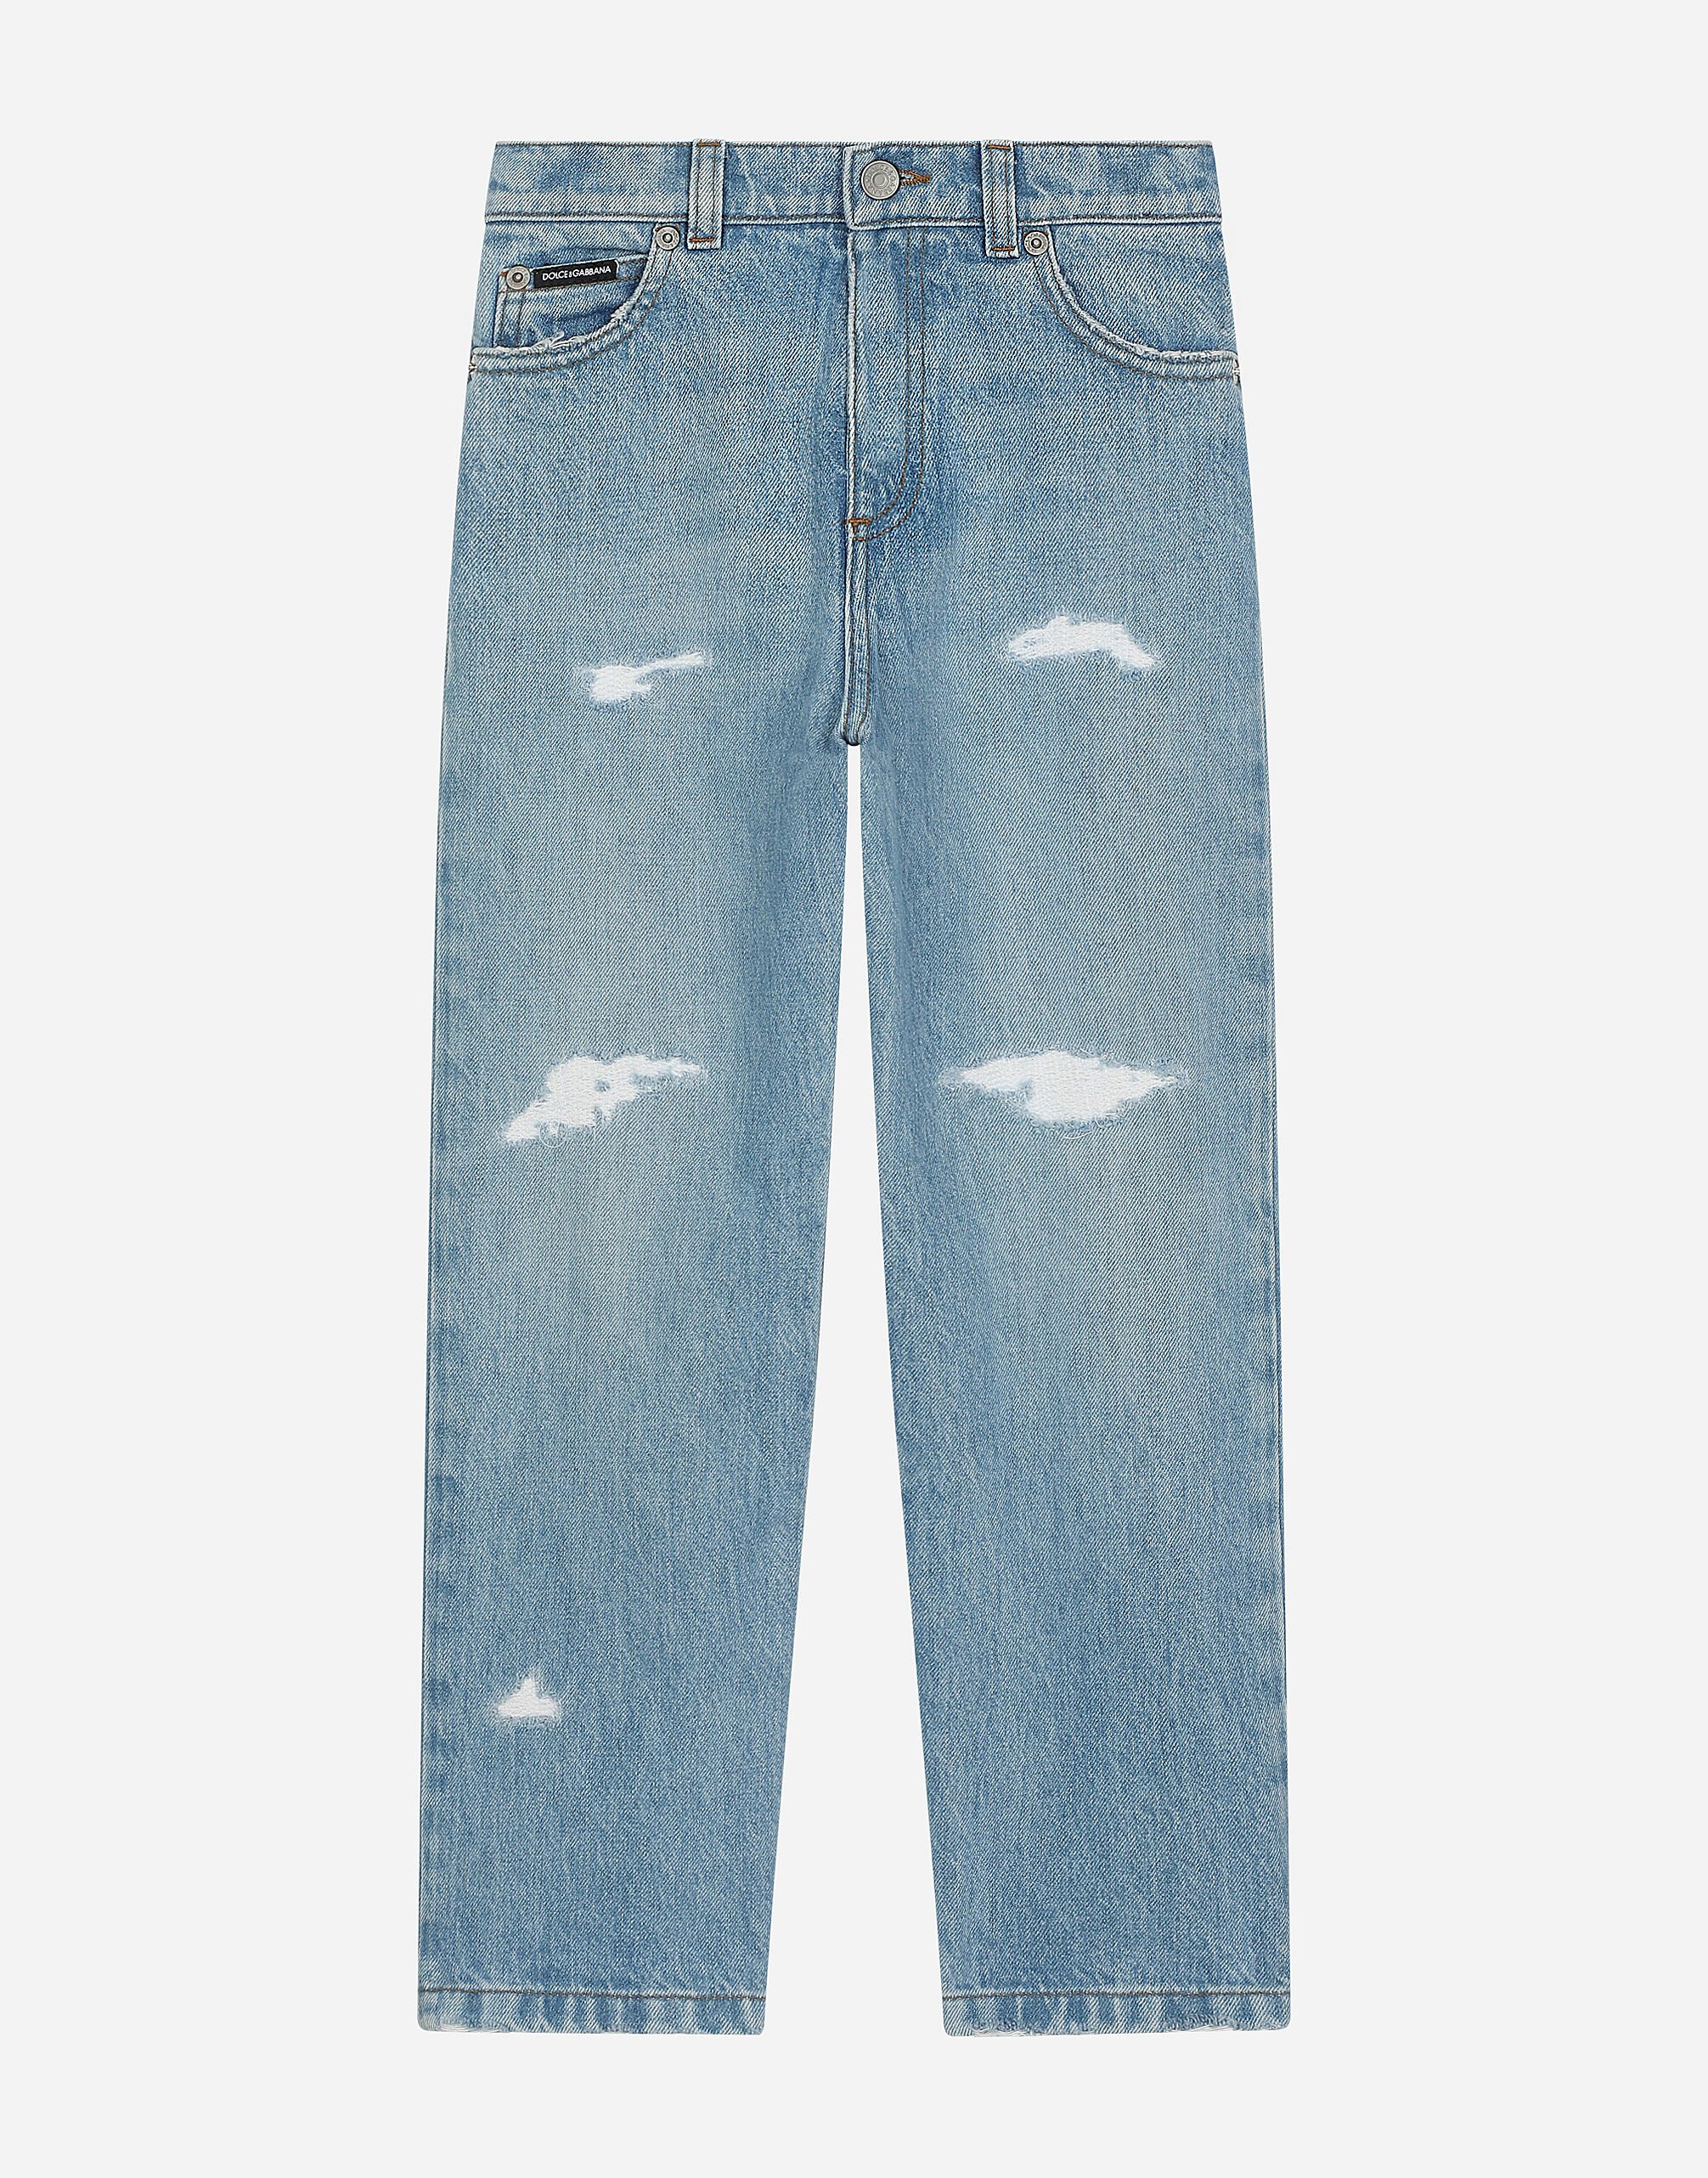 Dolce & Gabbana 5-pocket denim jeans with logo tag Print L4JQS3HS7NJ